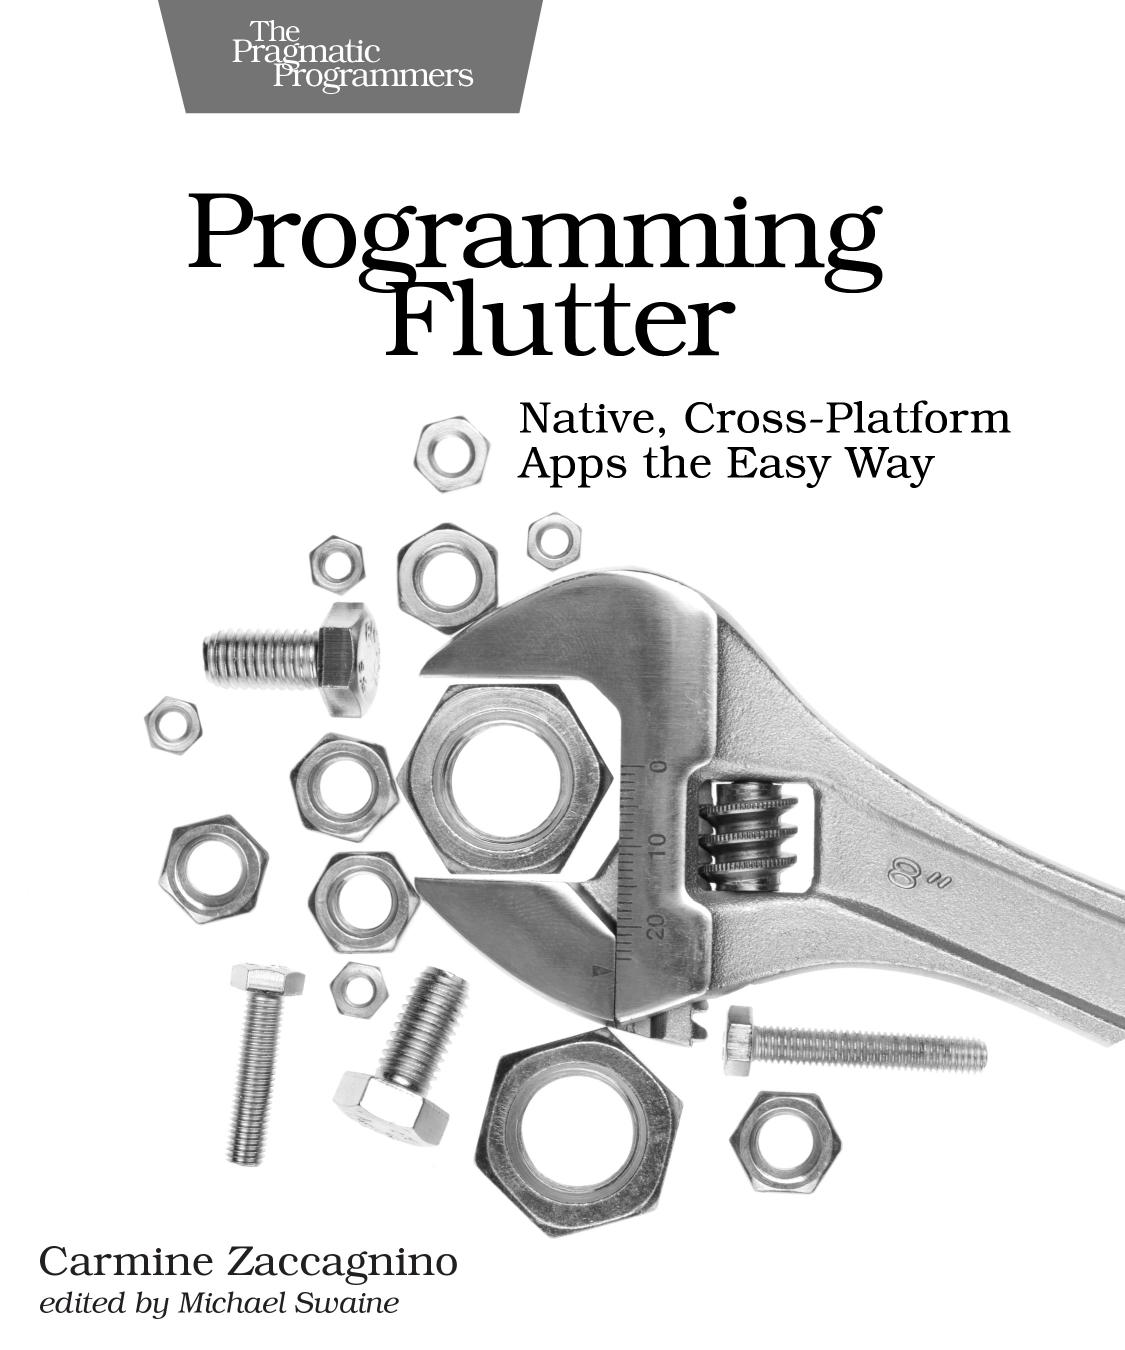 Programming Flutter by Carmine Zaccagnino